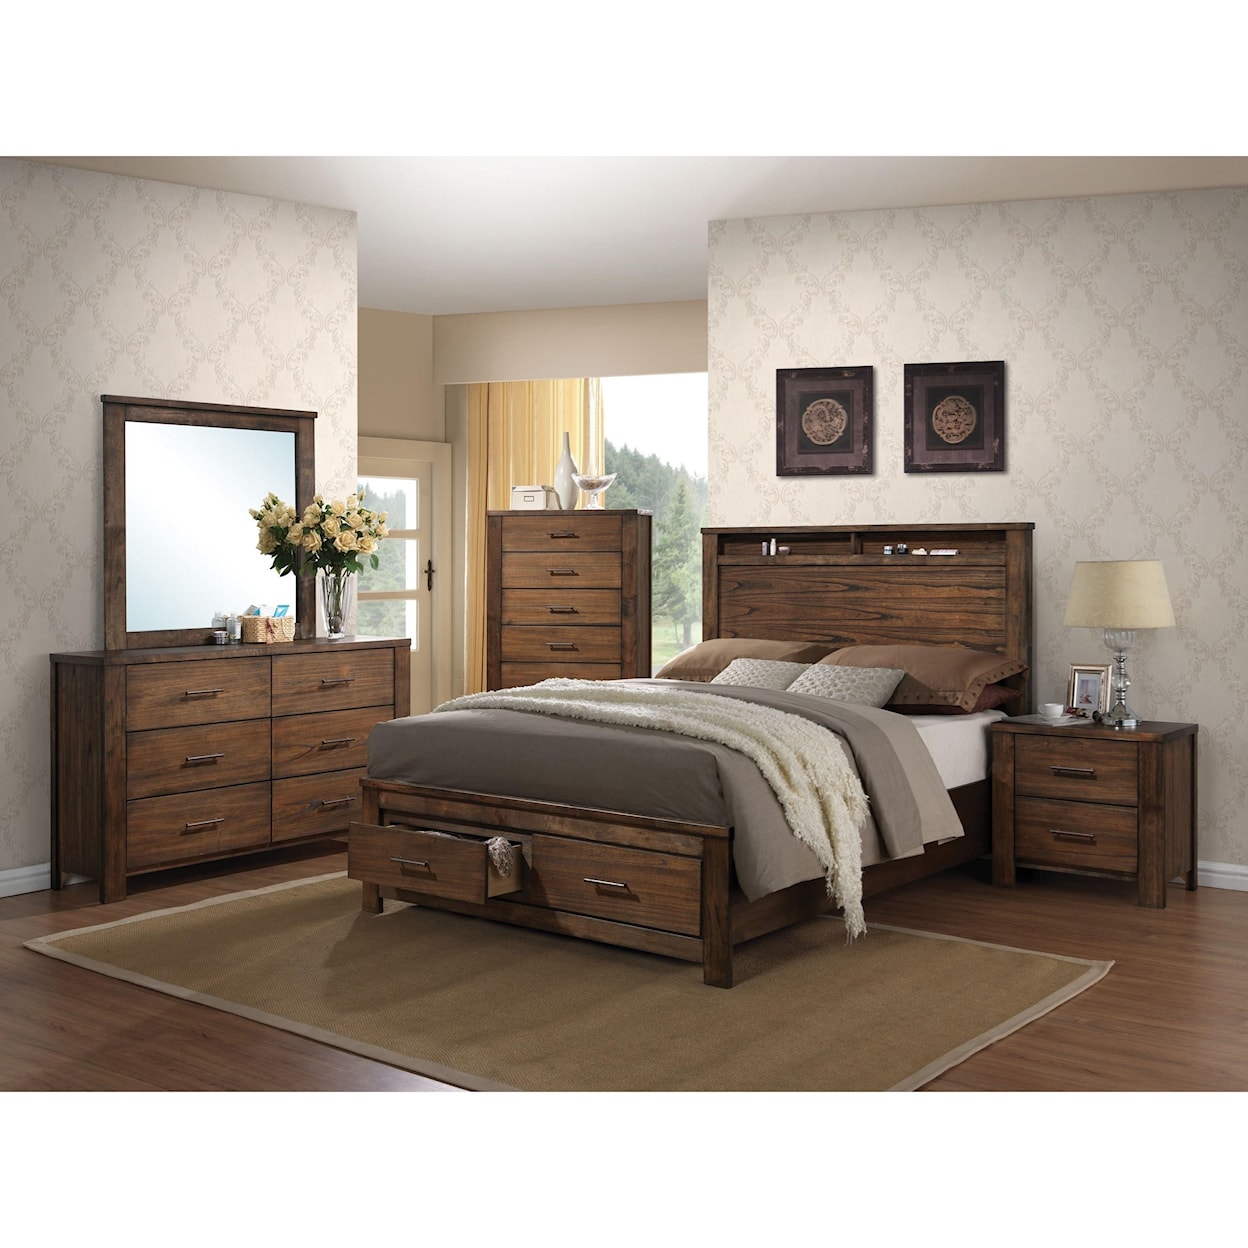 Acme Furniture Merrilee Queen Bed w/Storage